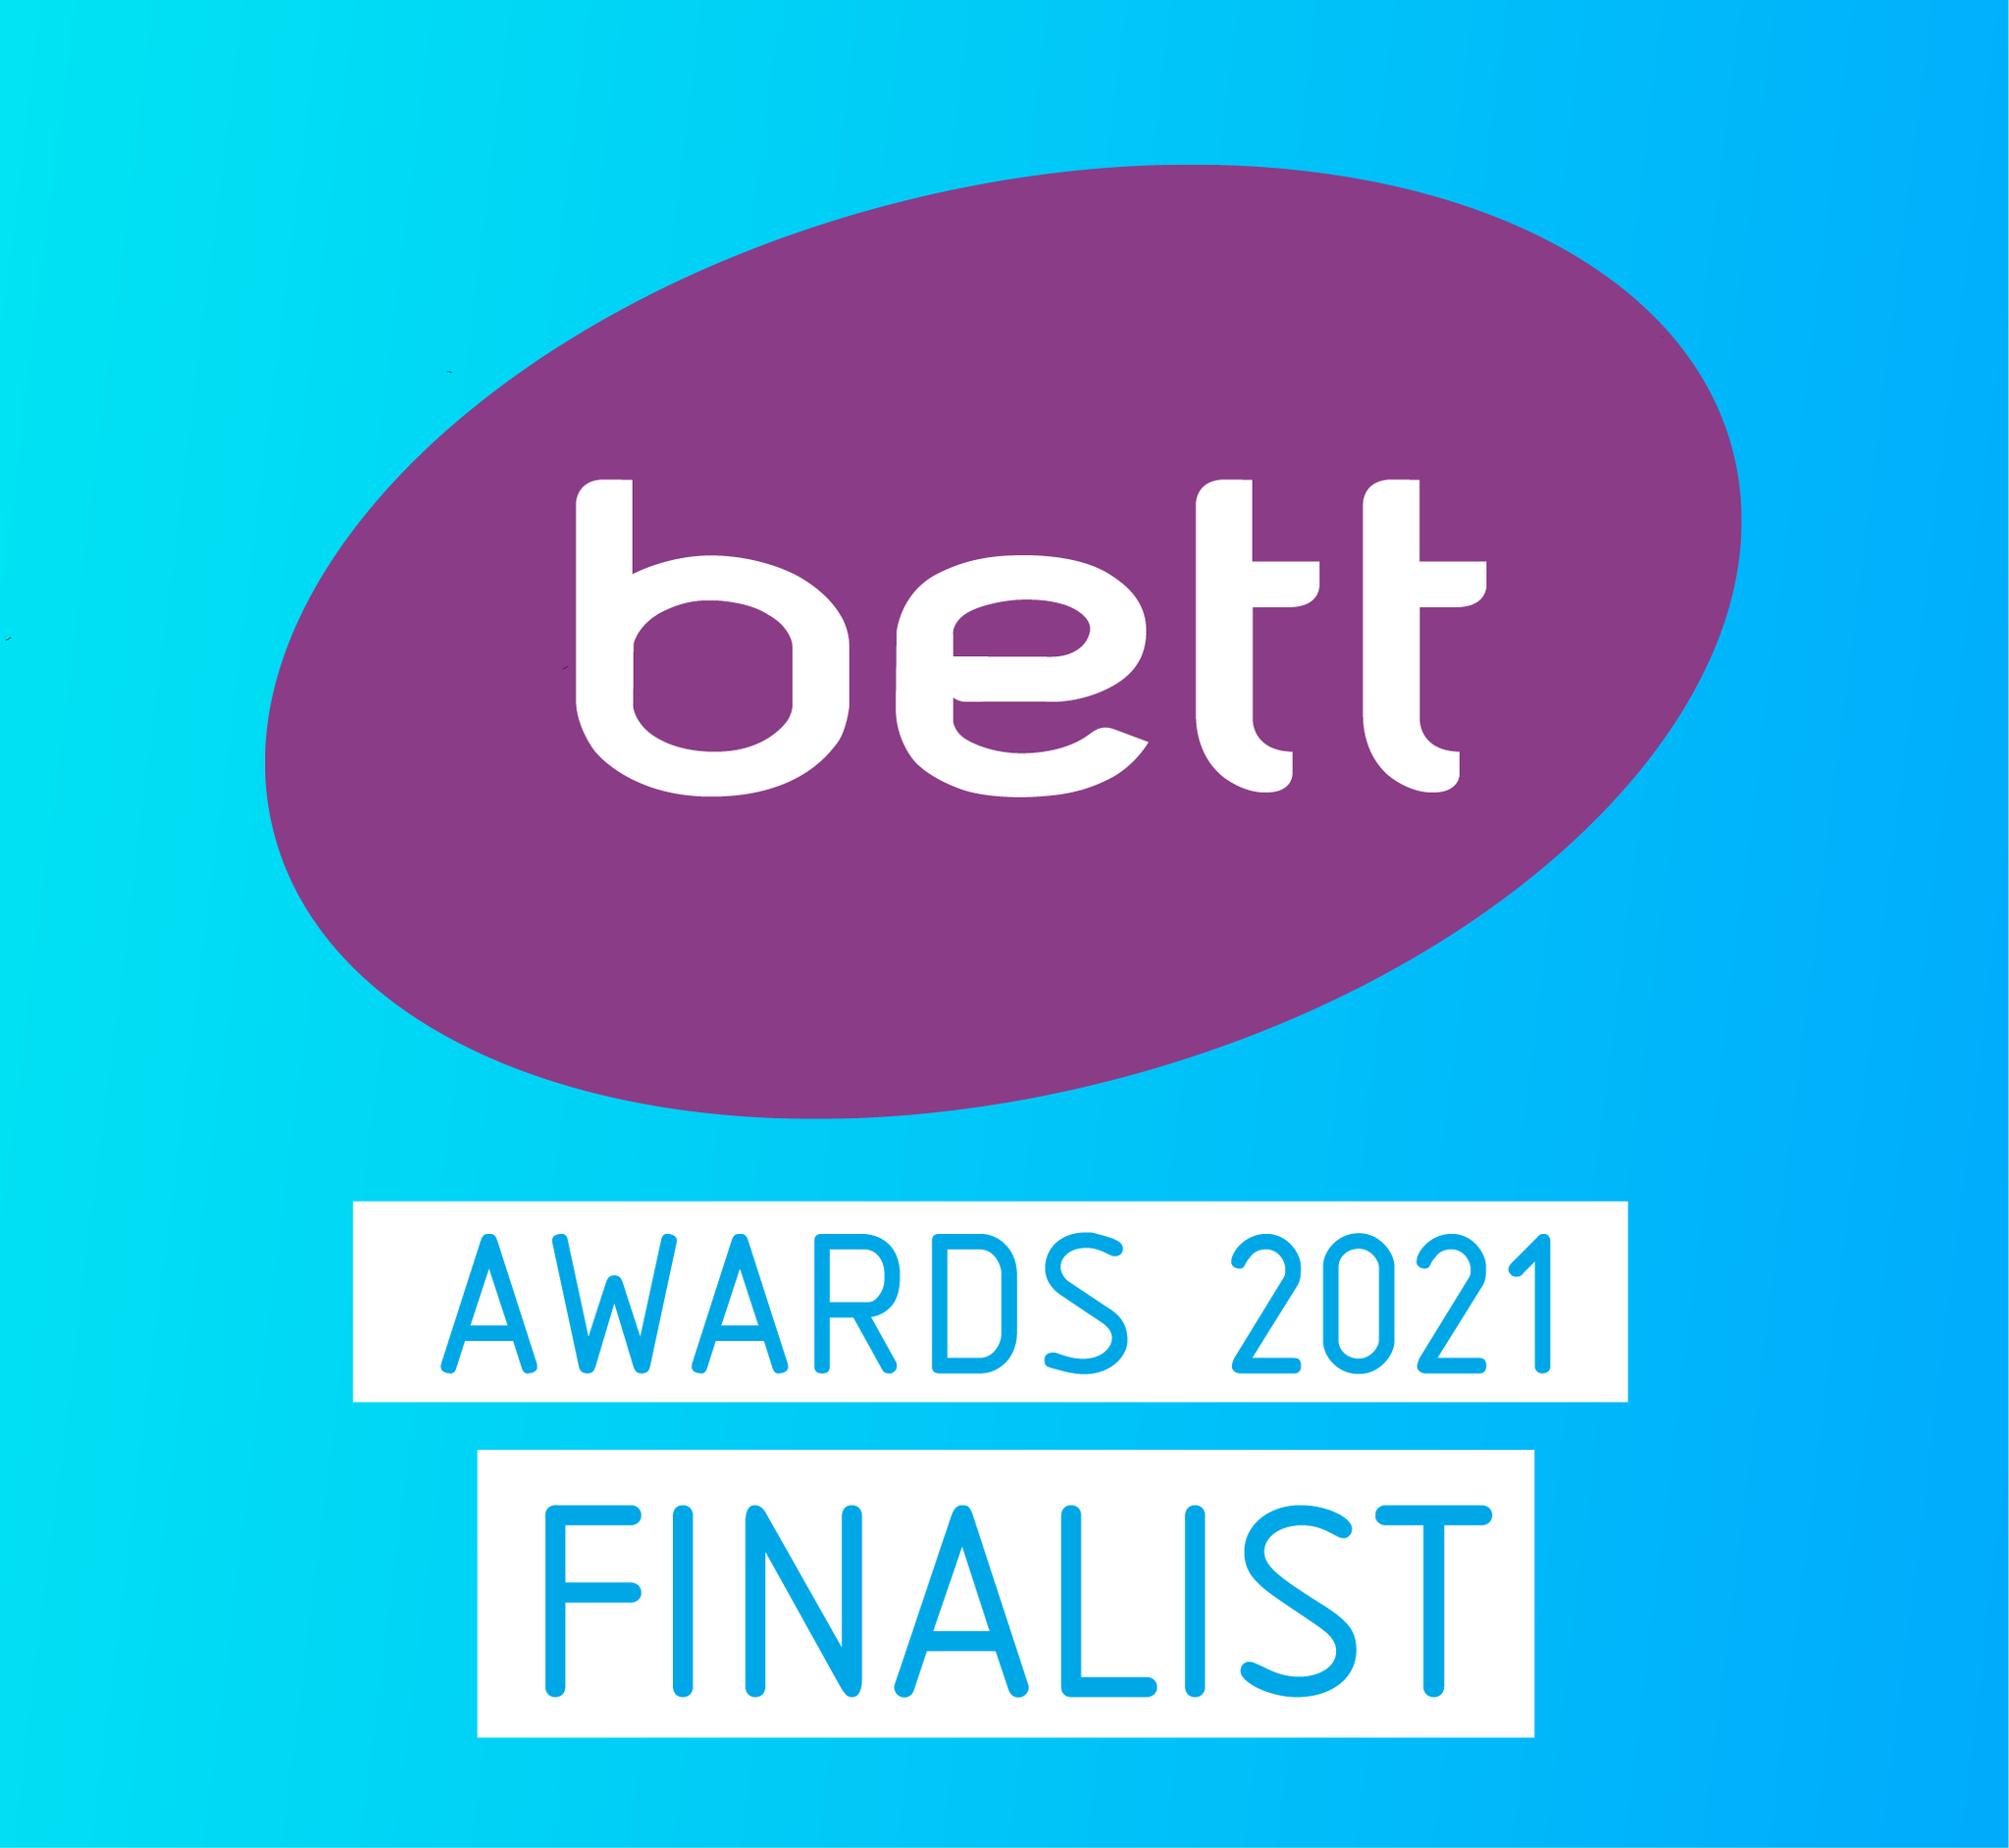 We've been shortlisted for a Bett Award!